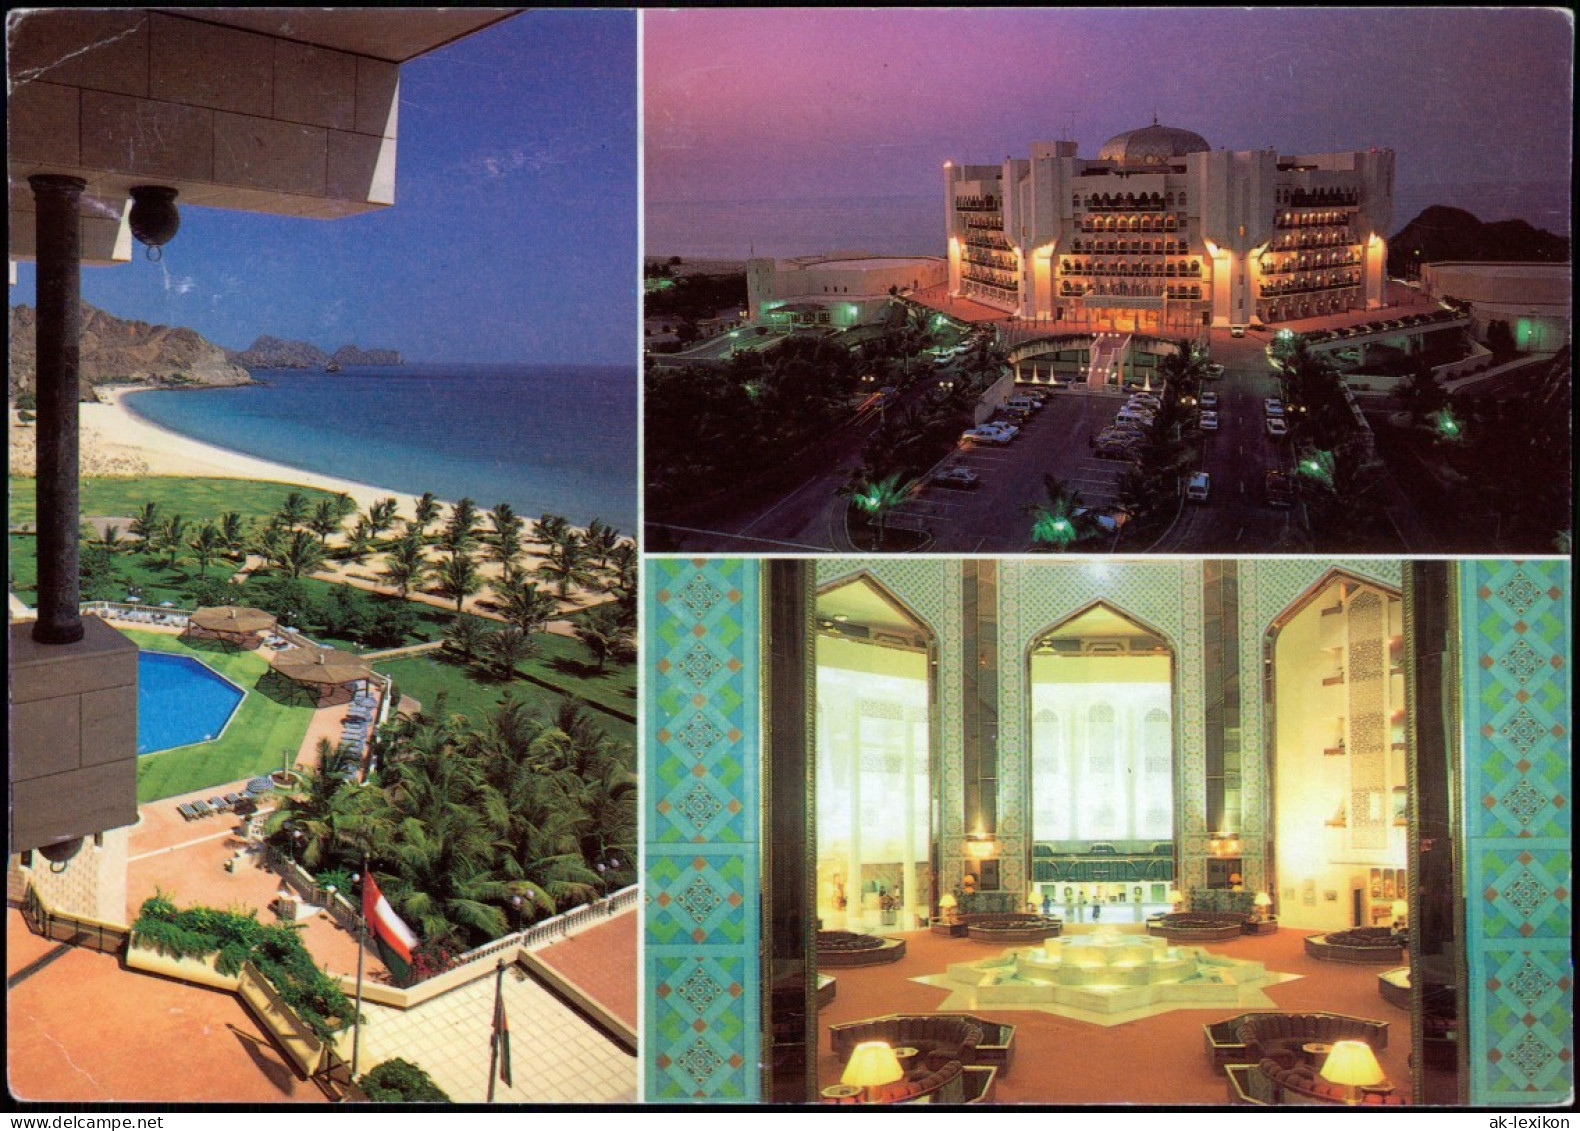 Postcard Al Bustān البستان PALACE HOTEL - 3 Bild 1975  Gel. Briefmarke - Oman